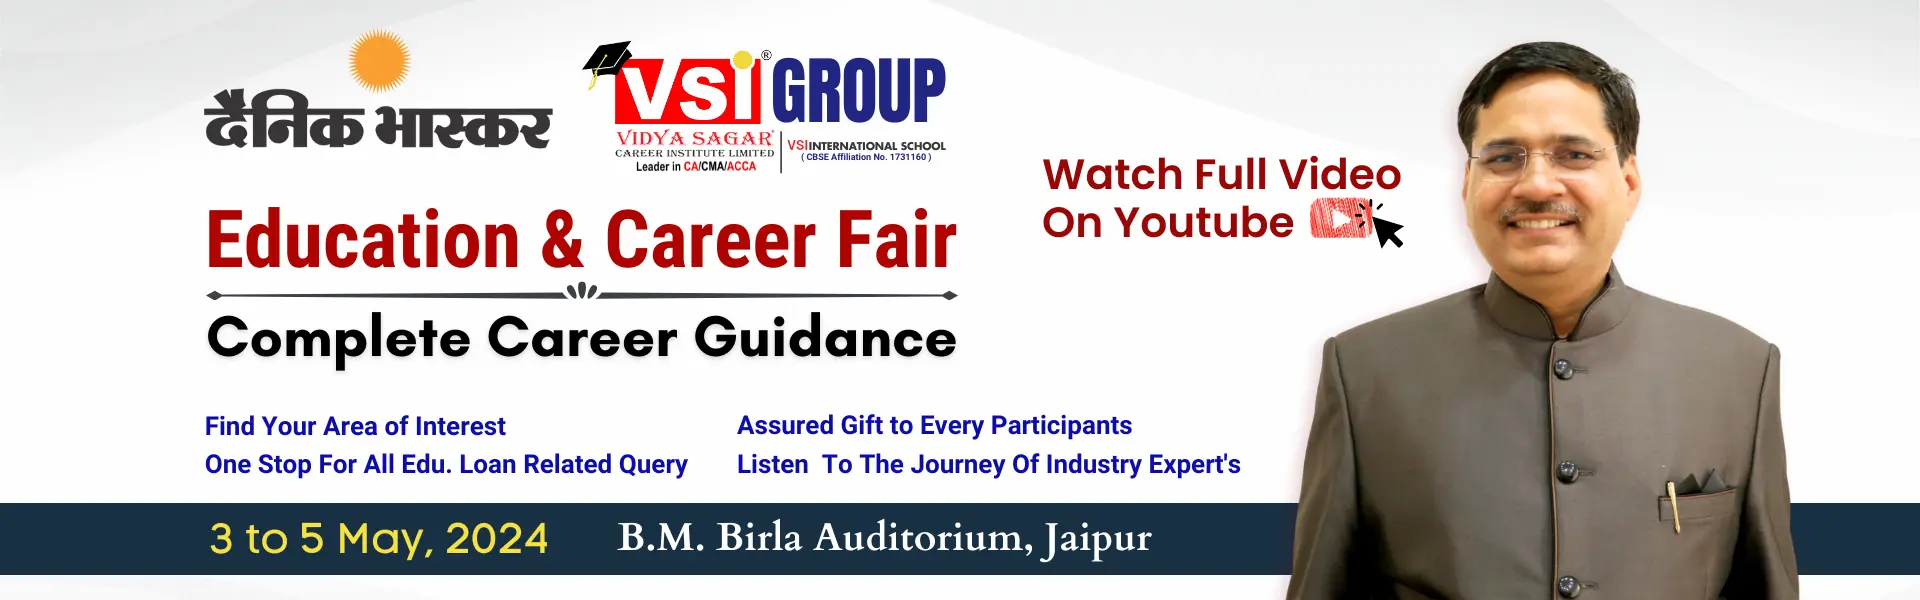 vsi-dainik-bhaskar-educational-and- career-fair-complete-career-guidance-website-banner